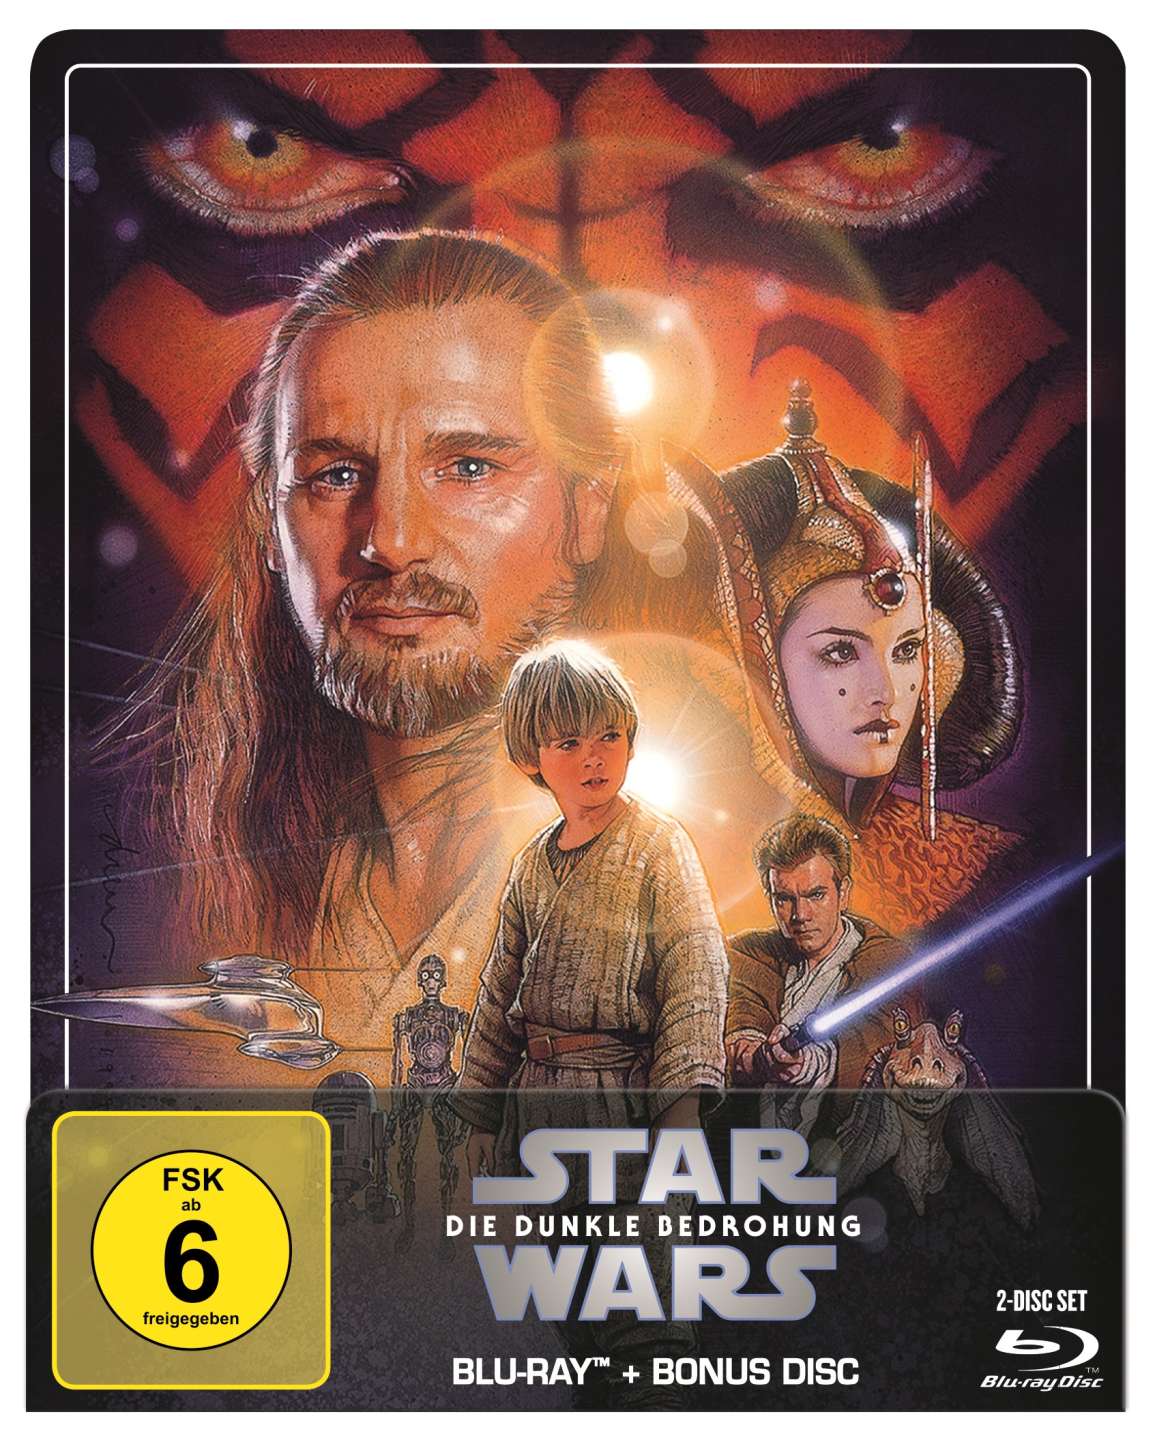 Star Wars Episode 1: Die dunkle Bedrohung (Blu-ray im Steelbook) – jpc